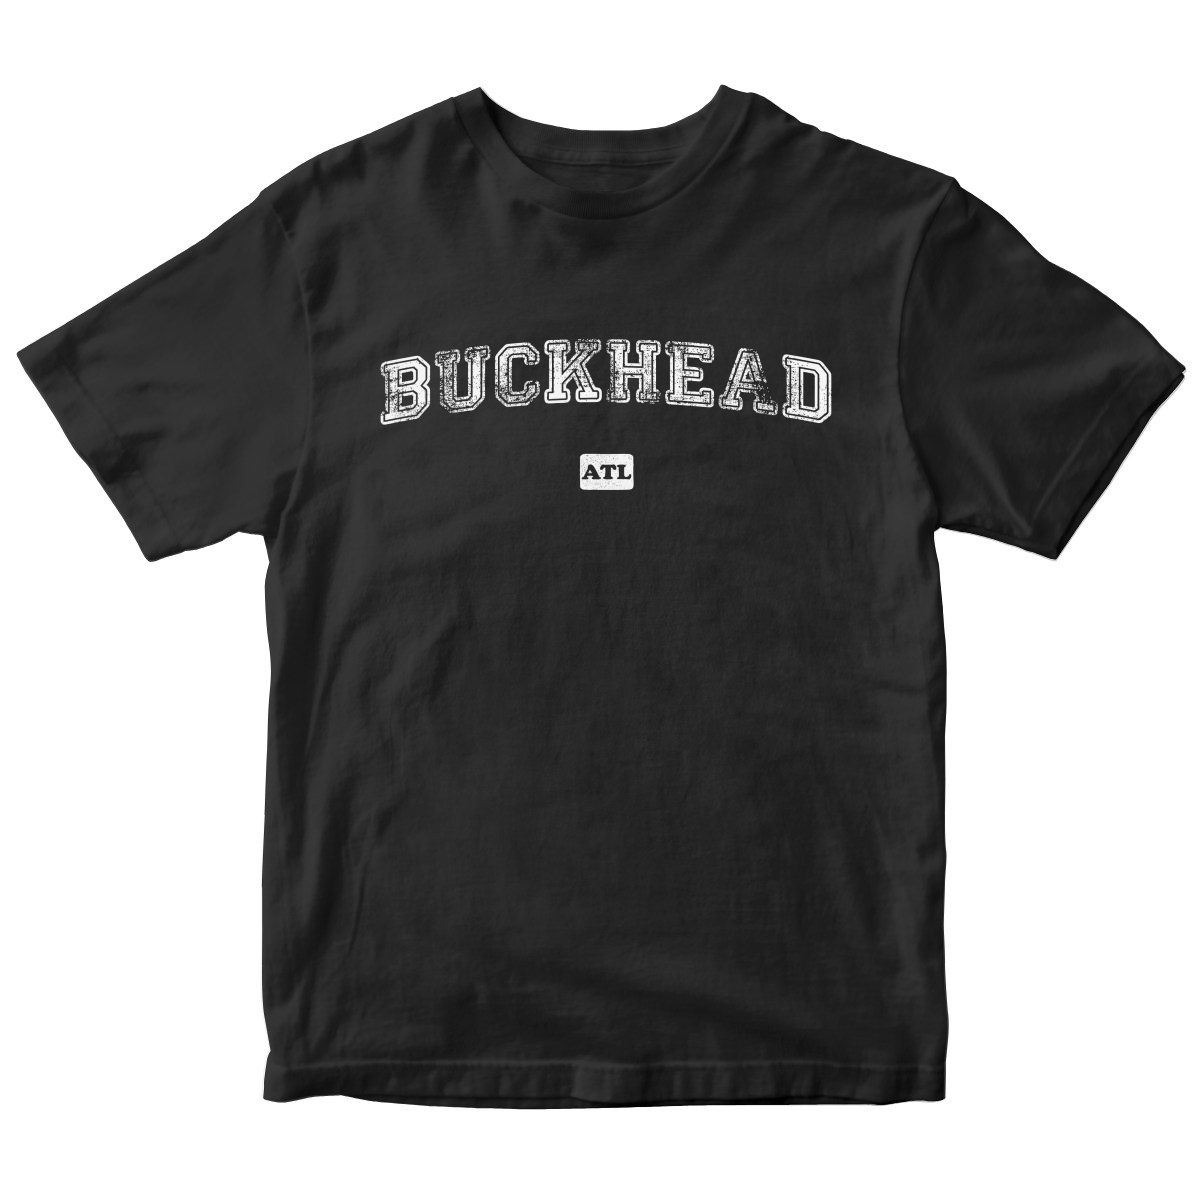 Buckhead ATL Represent Kids T-shirt | Black